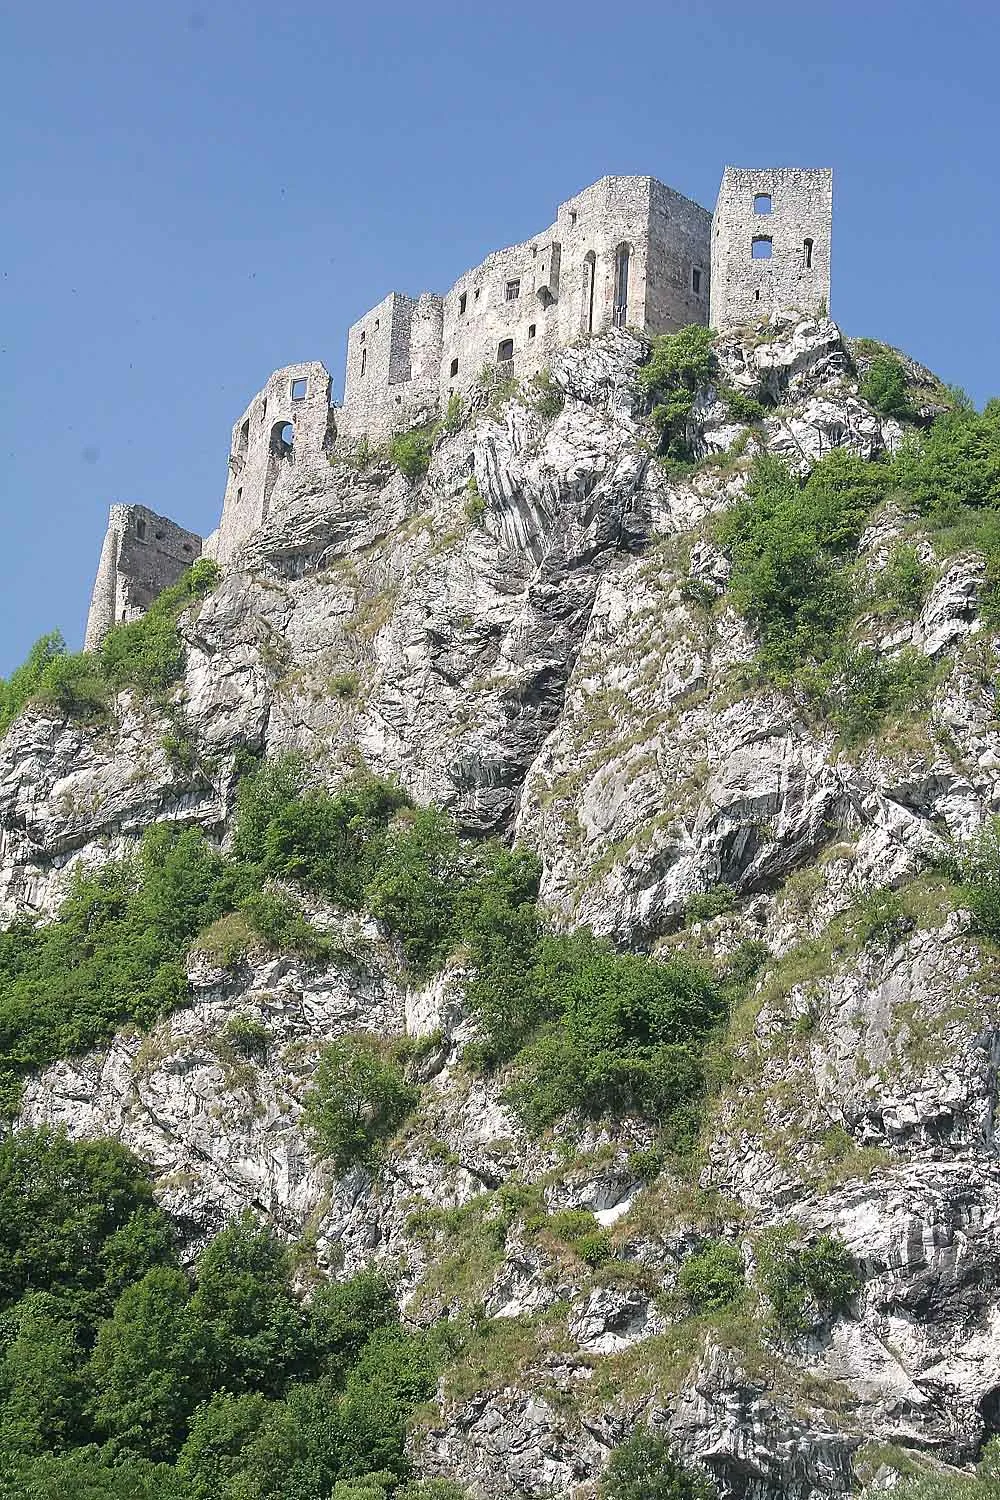 Photo showing: Castle Strečno, District Žilina, Slovakia
autor: Prazak

Date : 28. 6, 2006